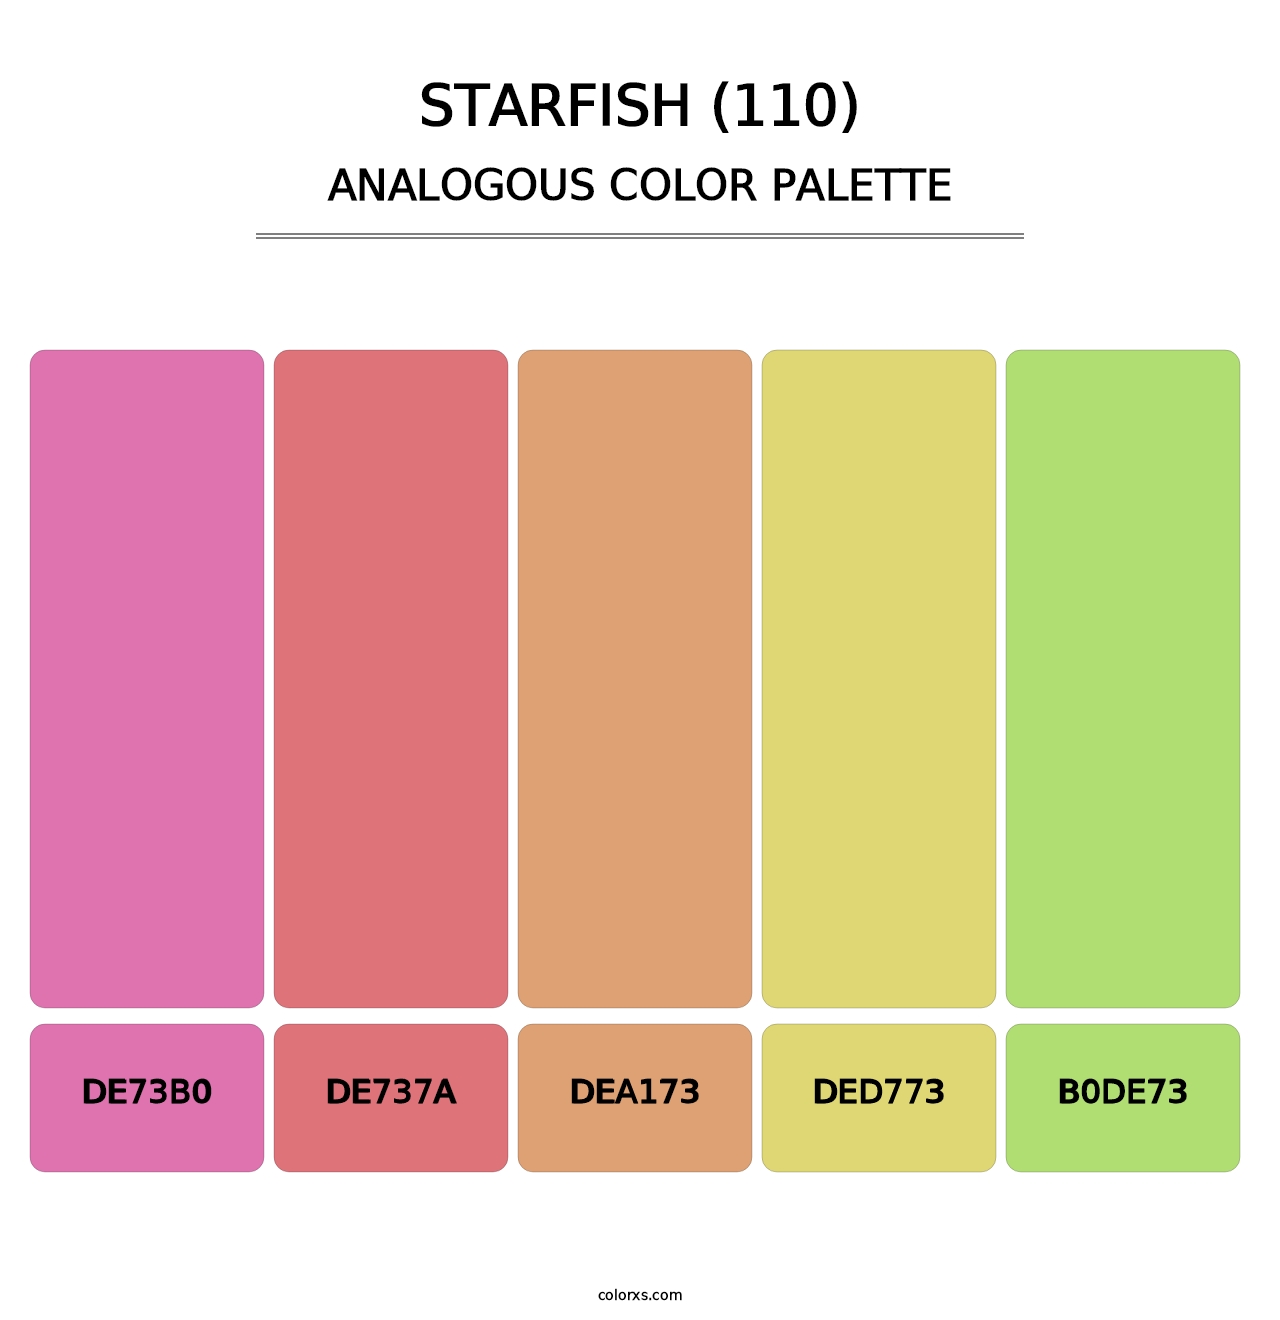 Starfish (110) - Analogous Color Palette